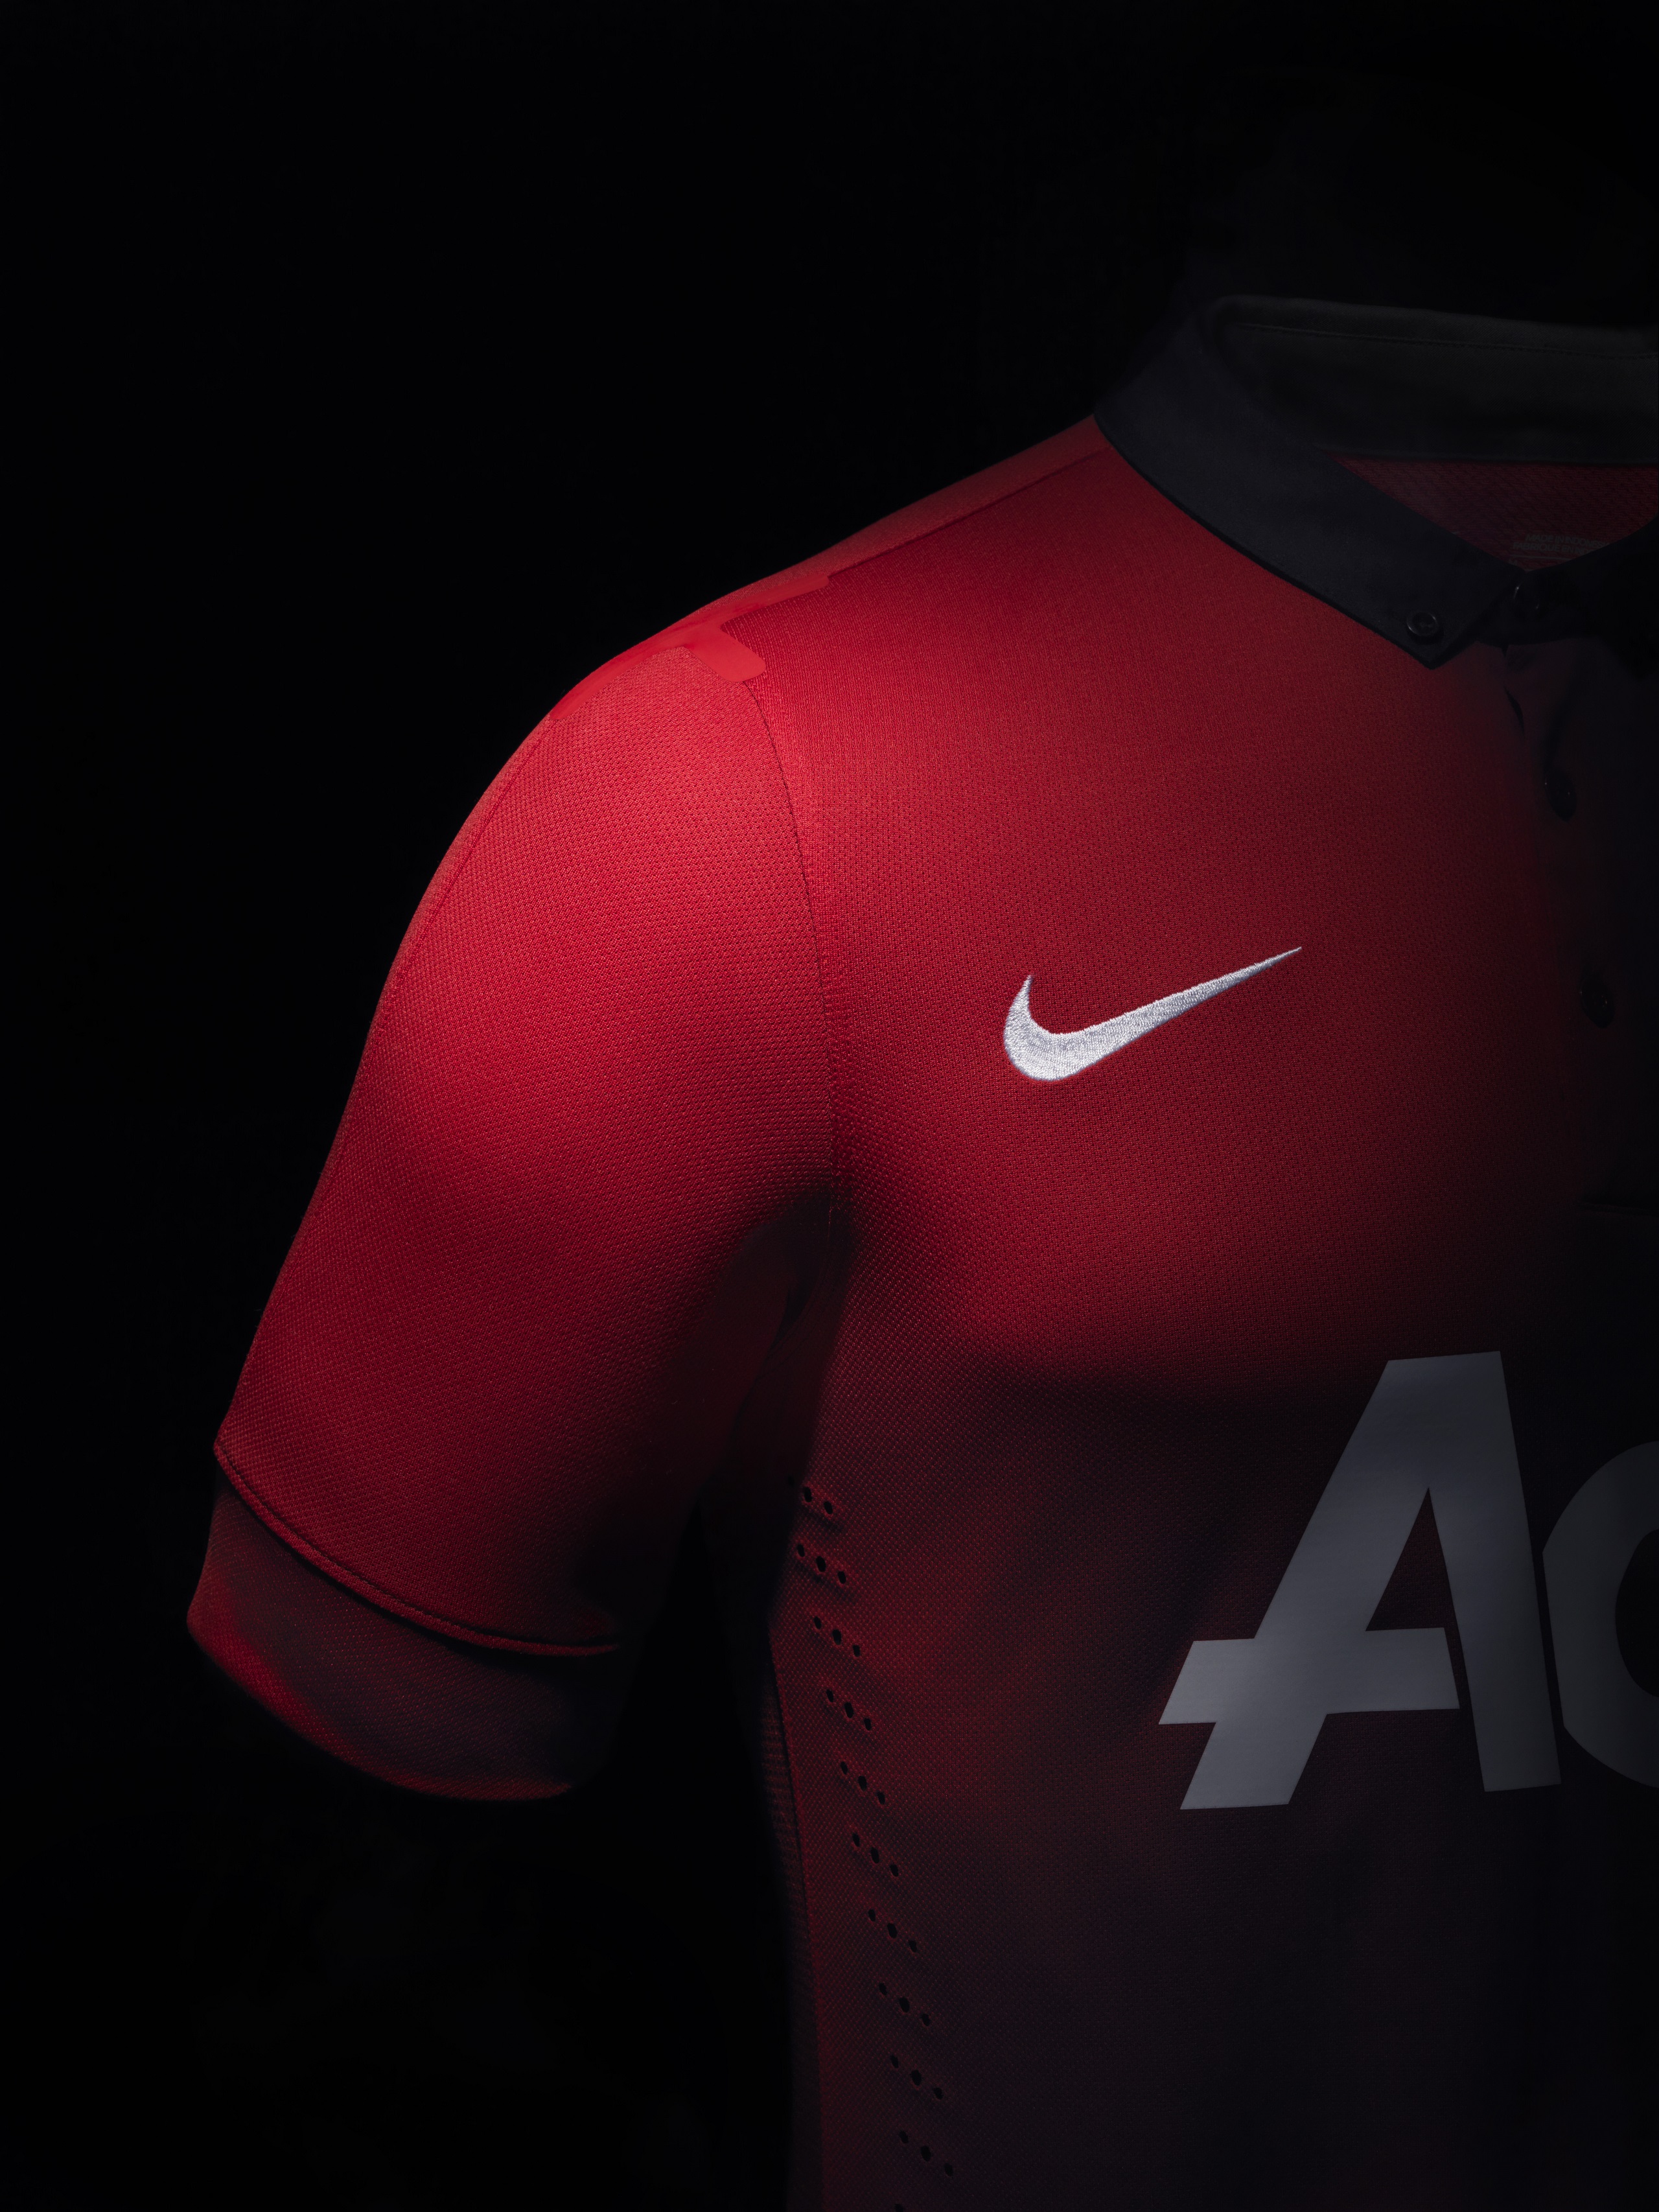 Manchester United 2013-14 home kit - Nike Swoosh